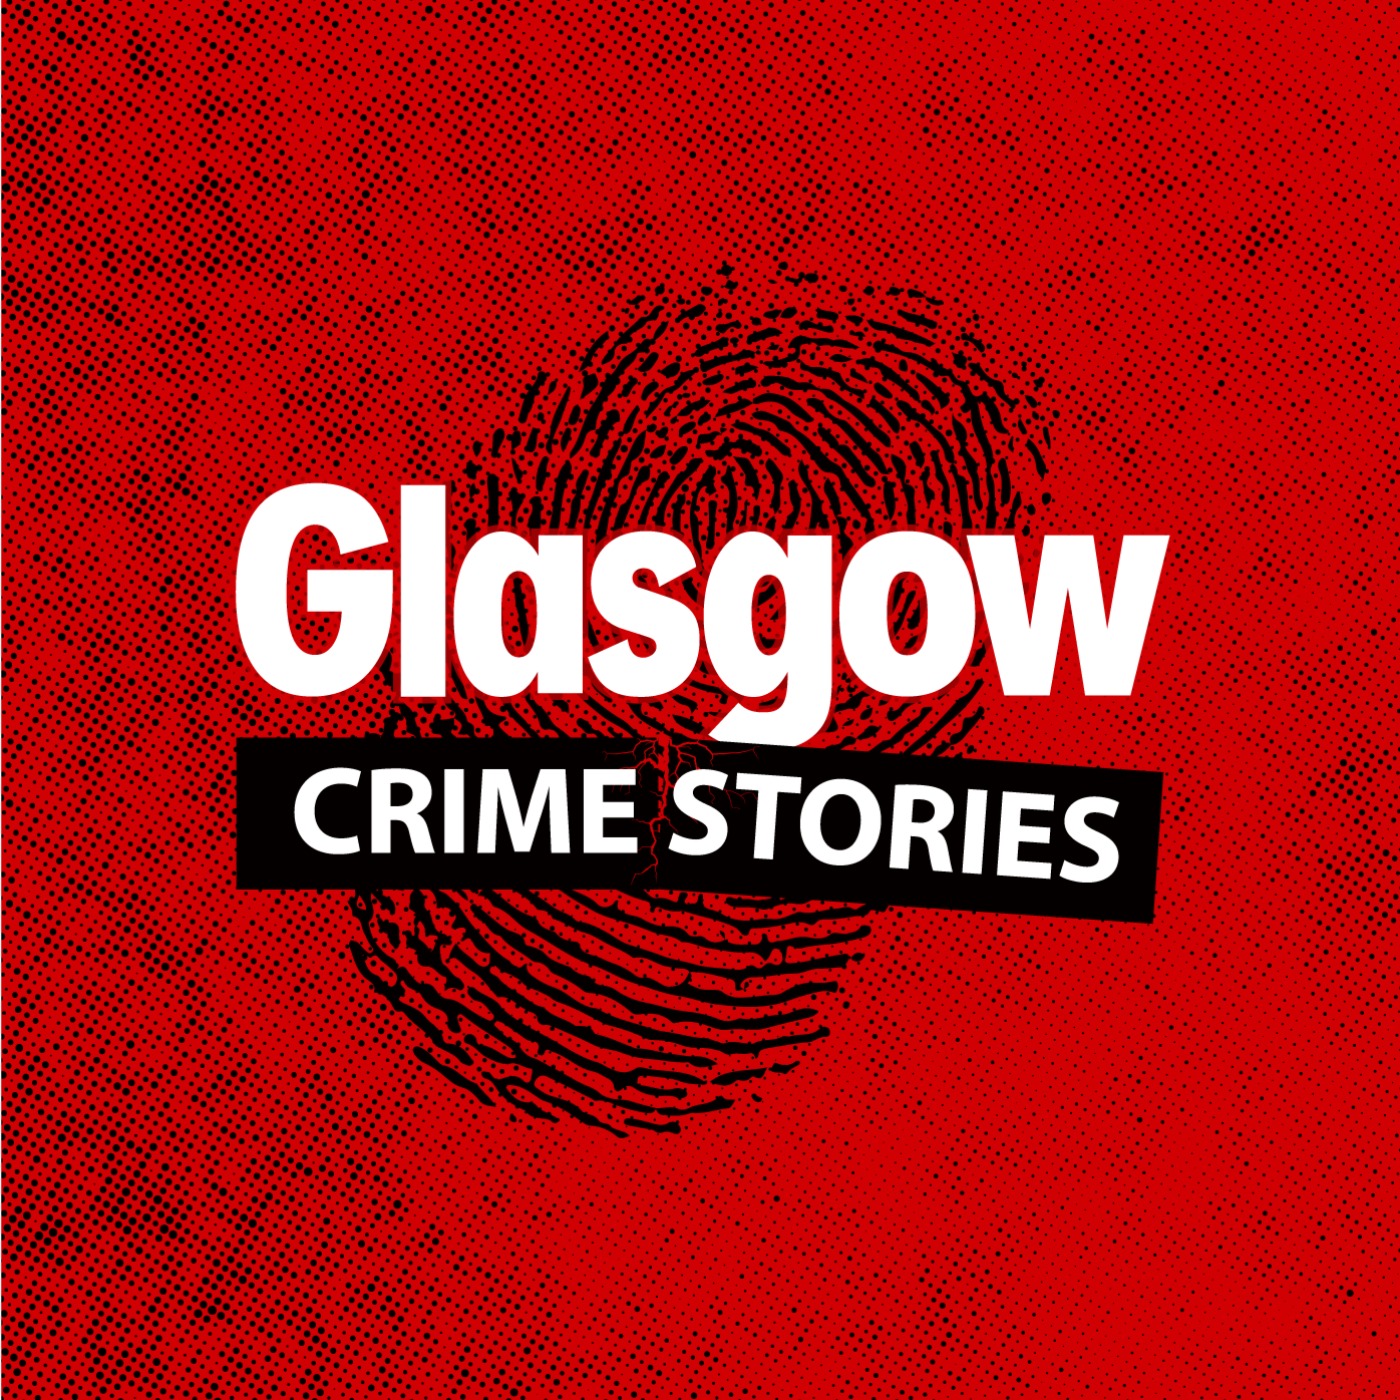 cover art for #44 Glasgow crime story of gangland figure murder 'The Gerbil'